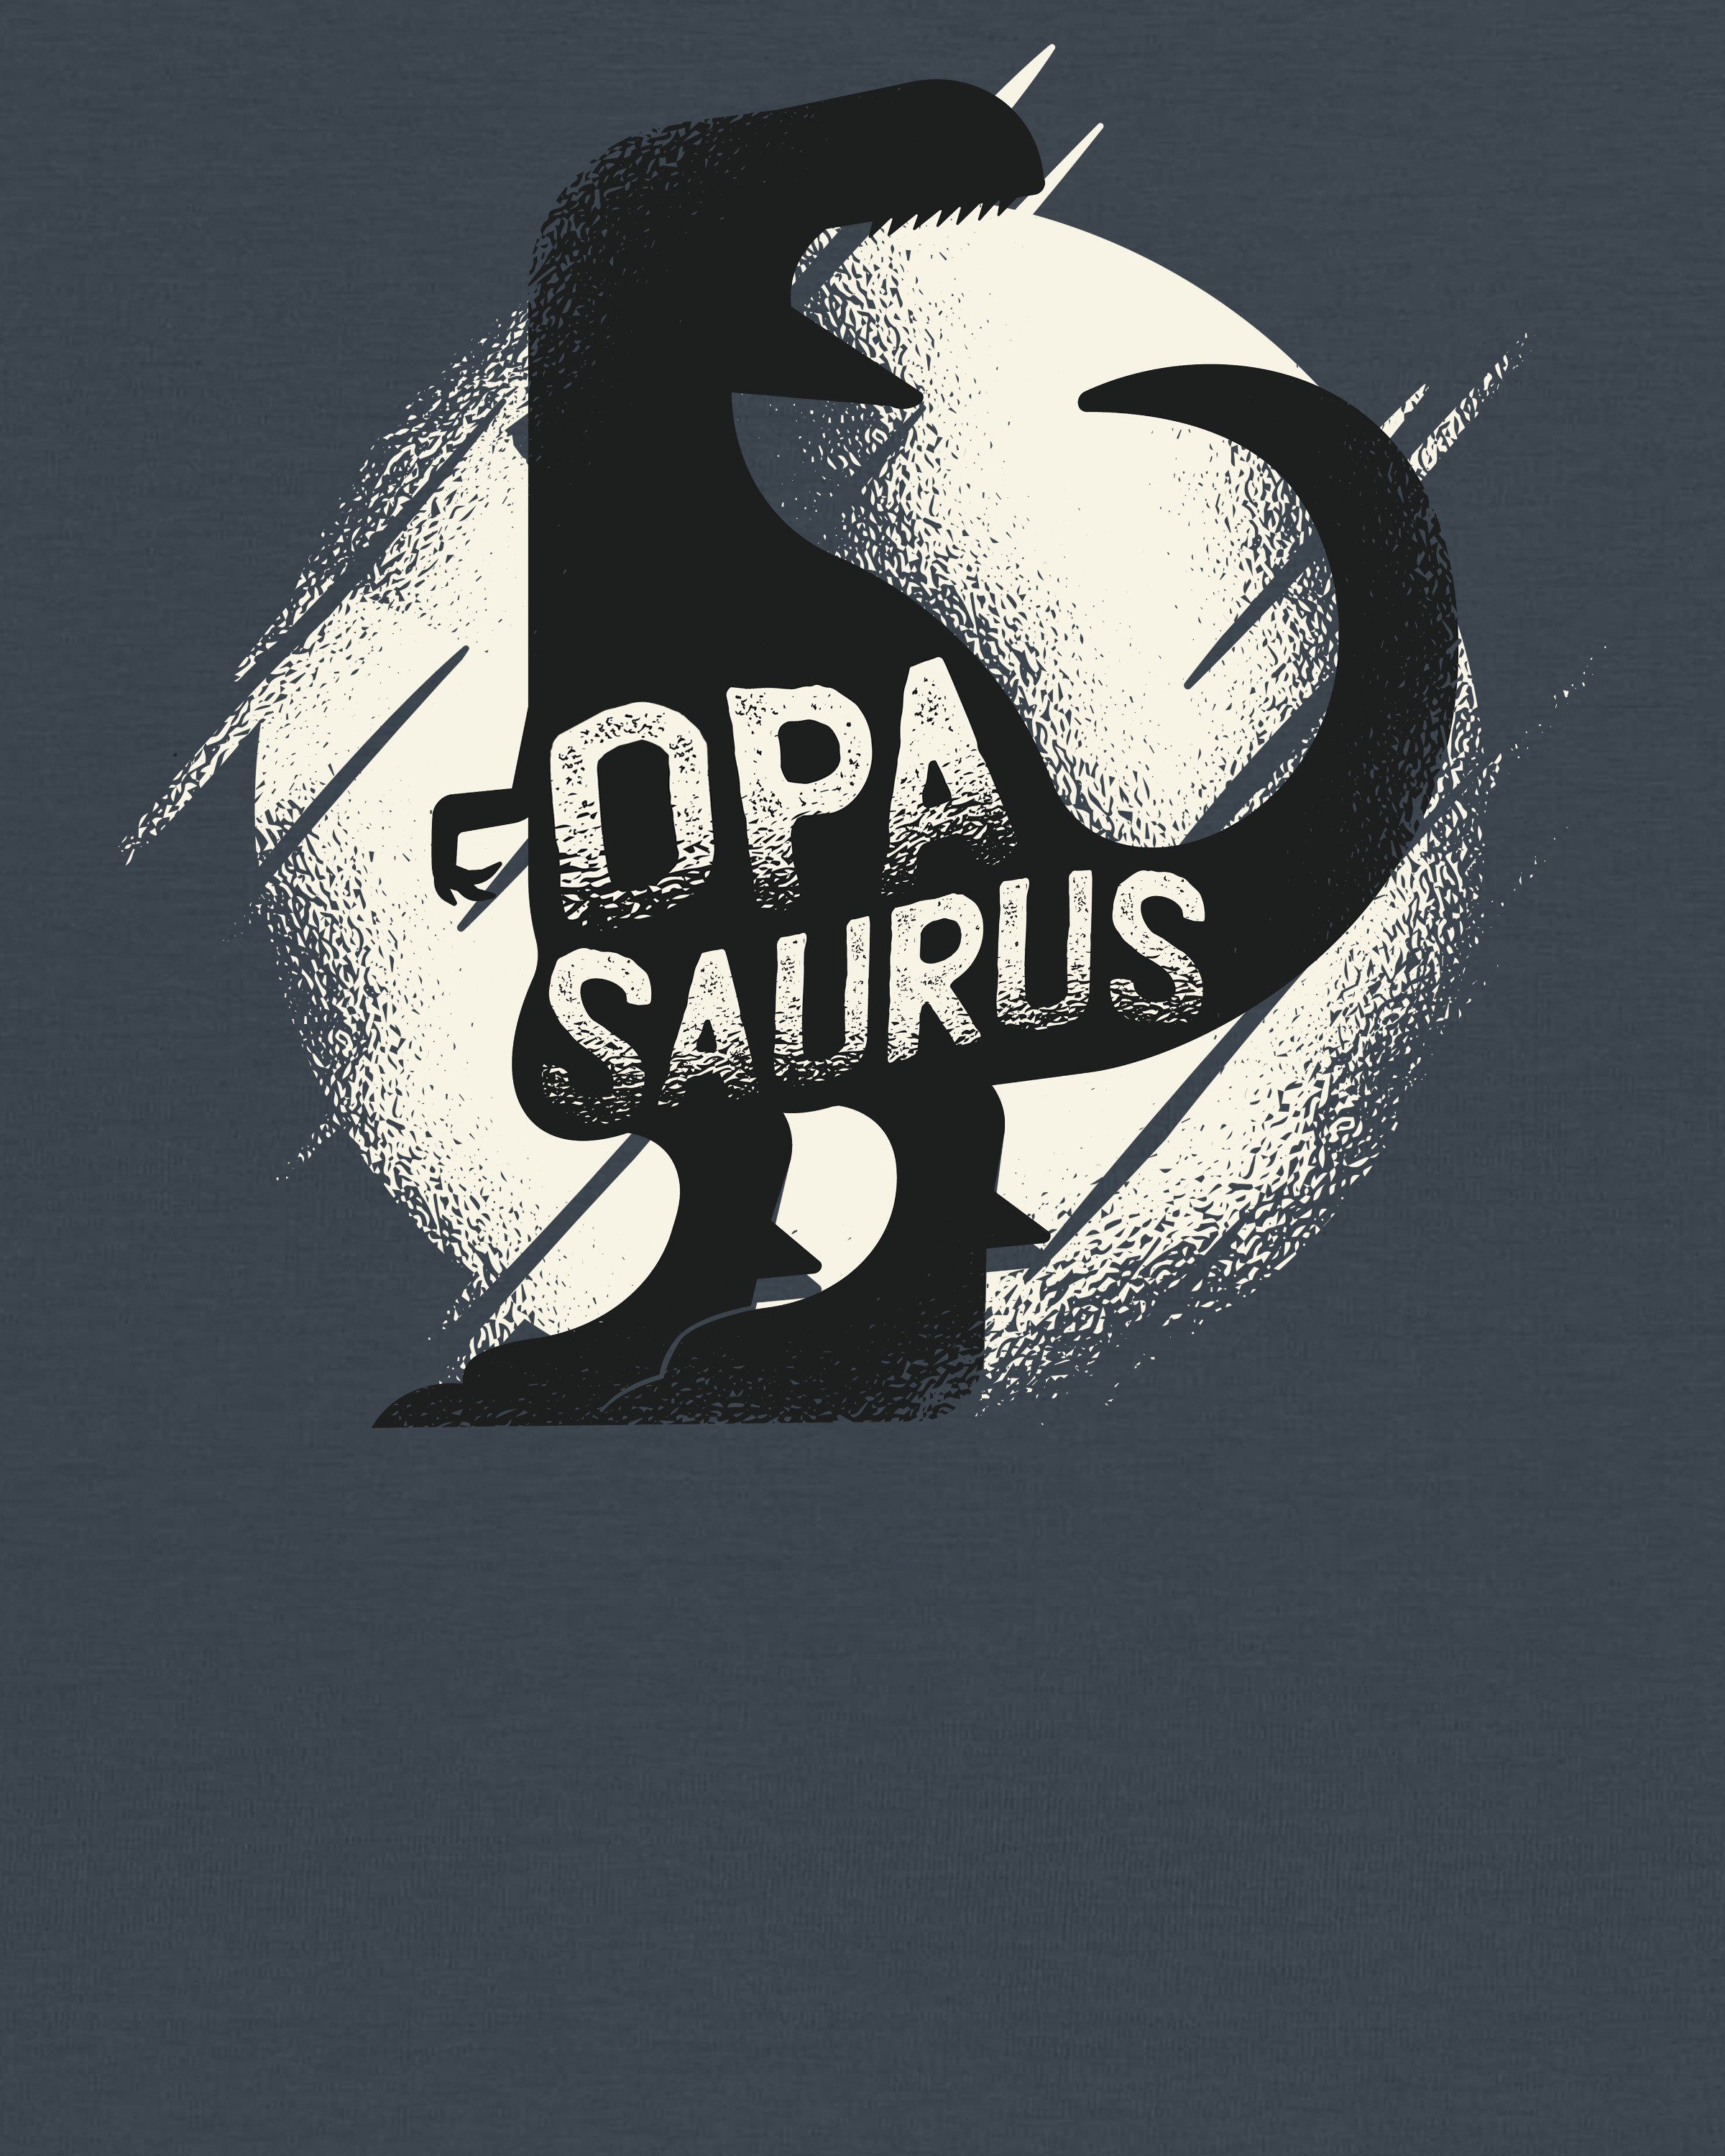 wat? Apparel Print-Shirt Opasaurus (1-tlg) dunkelblaugrau